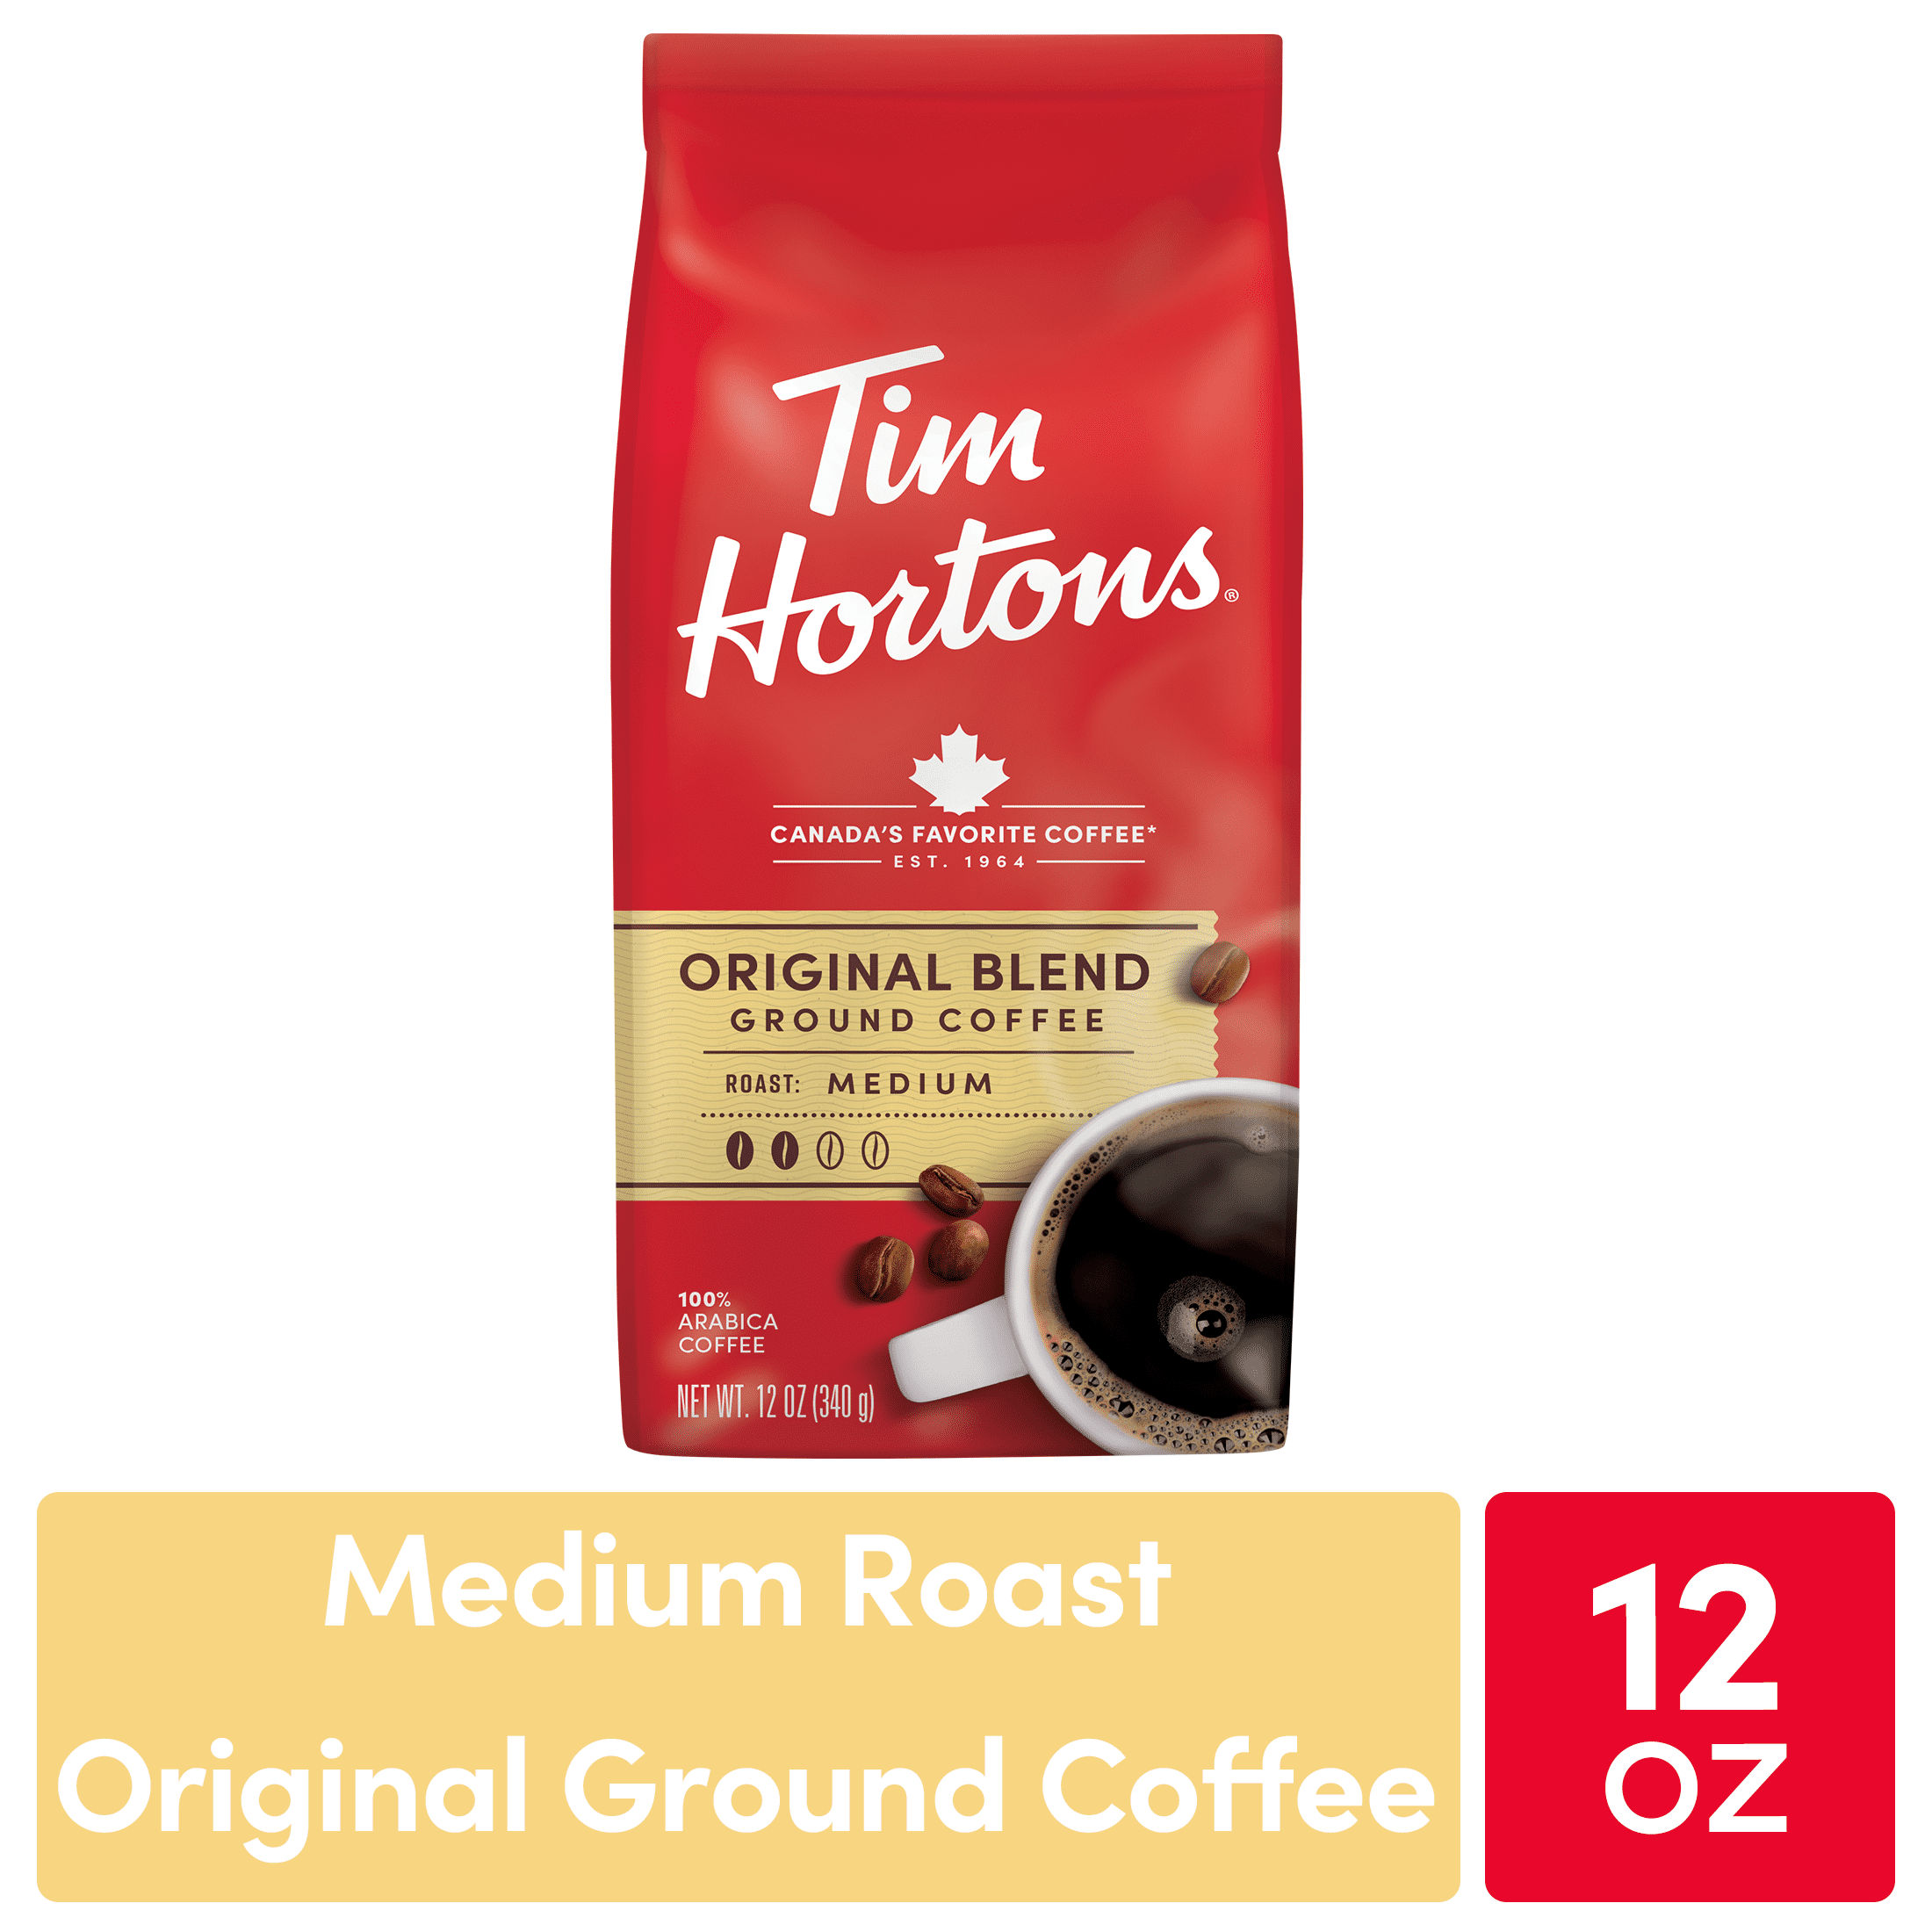 Tim Hortons Original Blend Ground Coffee, 100% Arabica Medium Roast, 12oz Bag